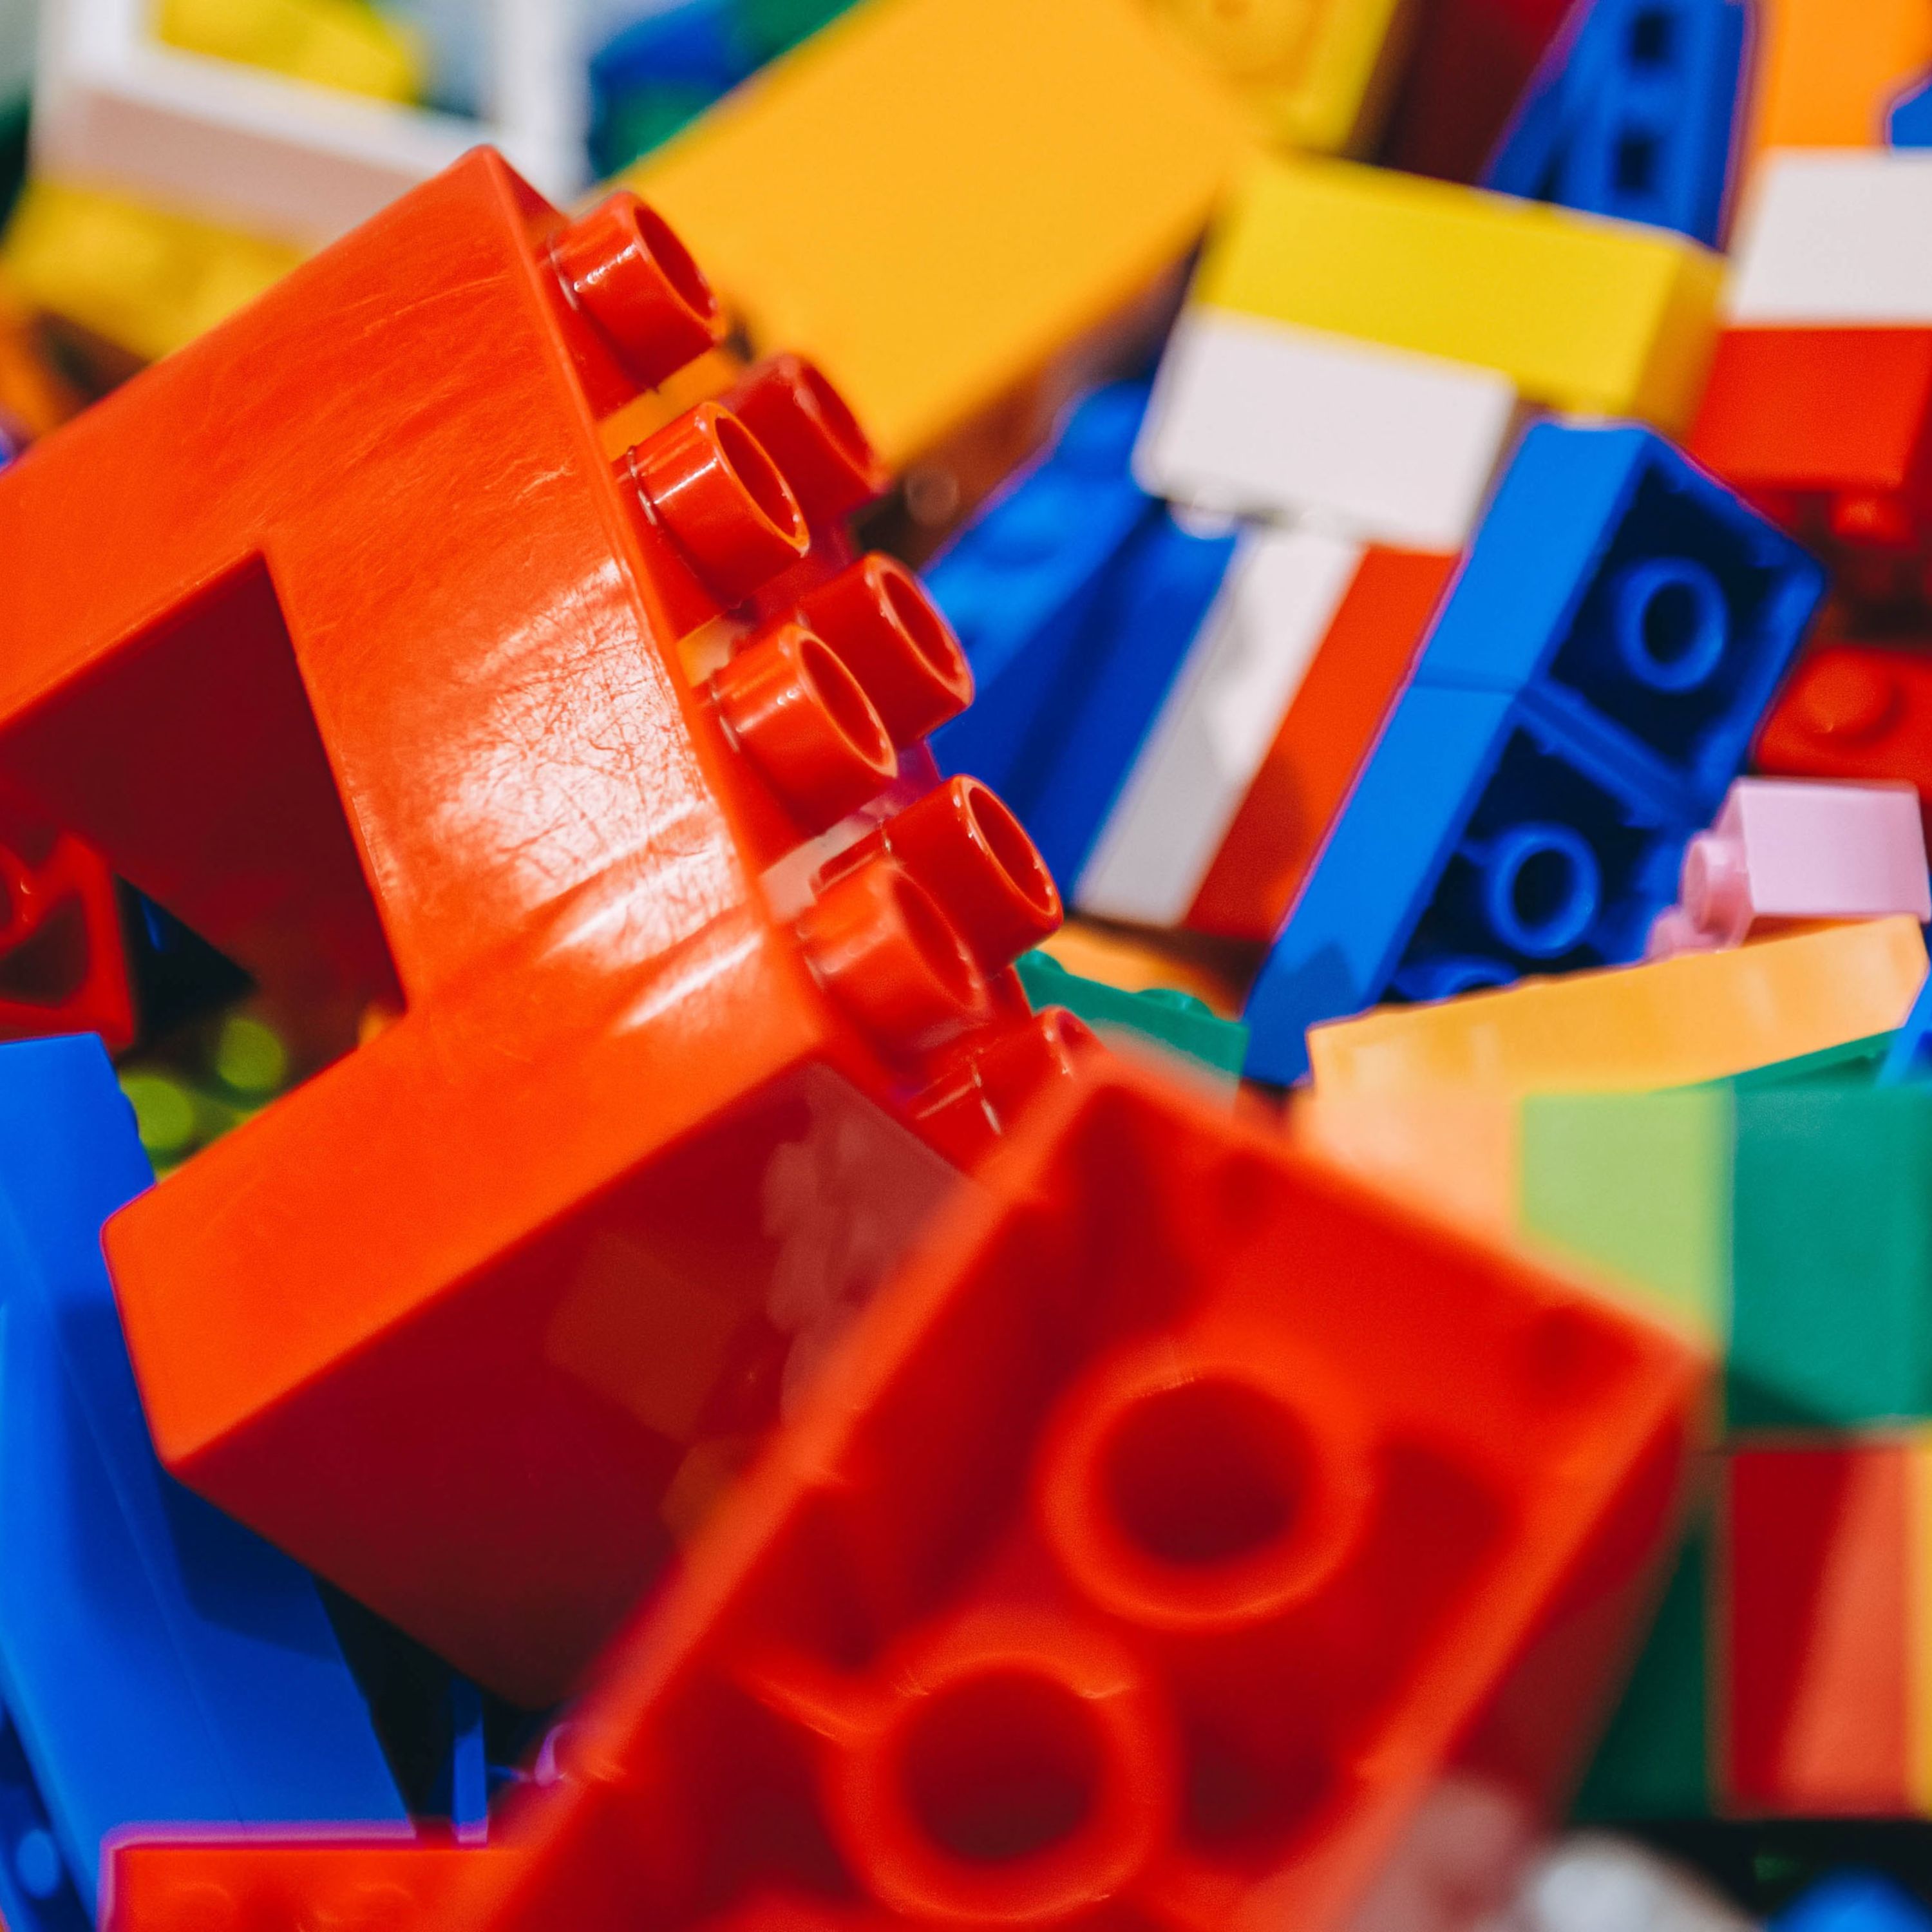 Culture Perth & Kinross - Colourful blocks of Lego